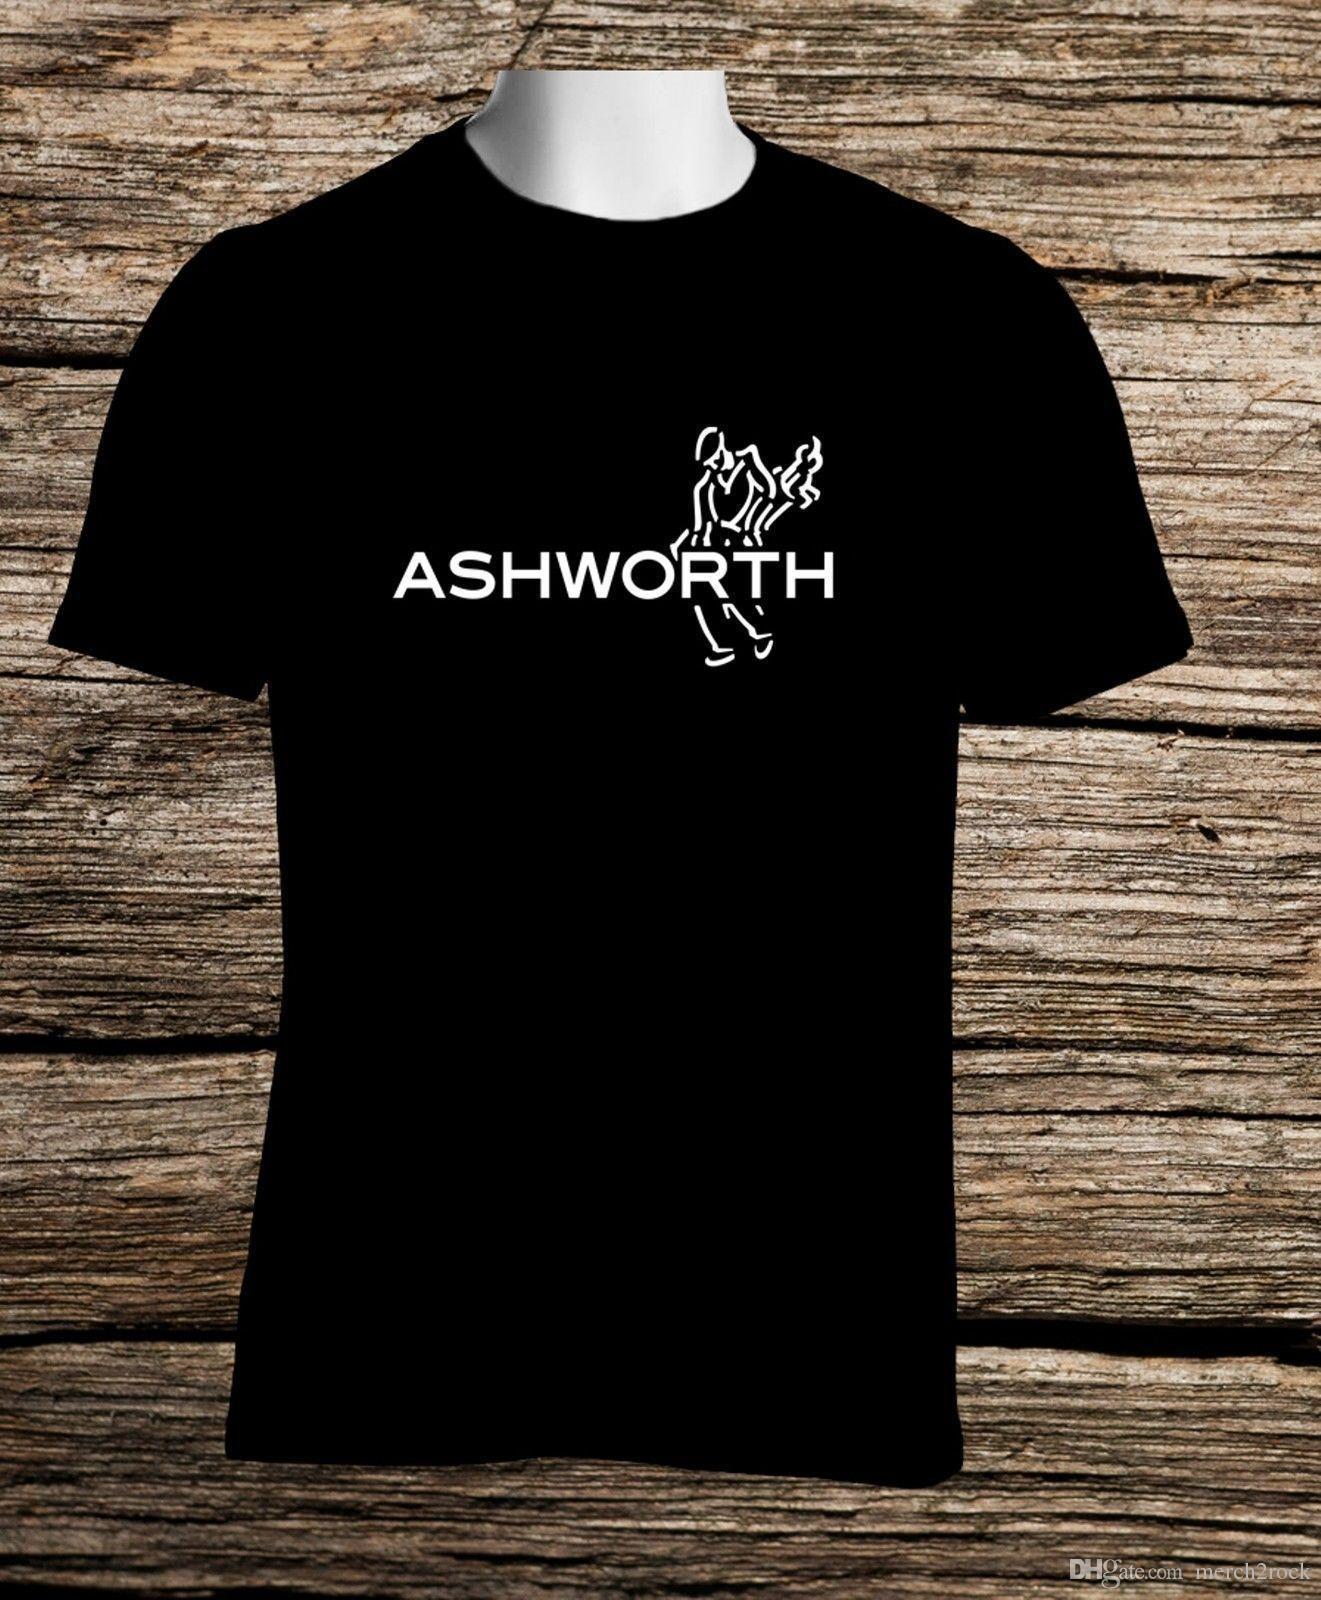 Ashworth Logo - Ashworth Golf Logo New T-Shirt Men s Black S-5XL FREE SHIPPING